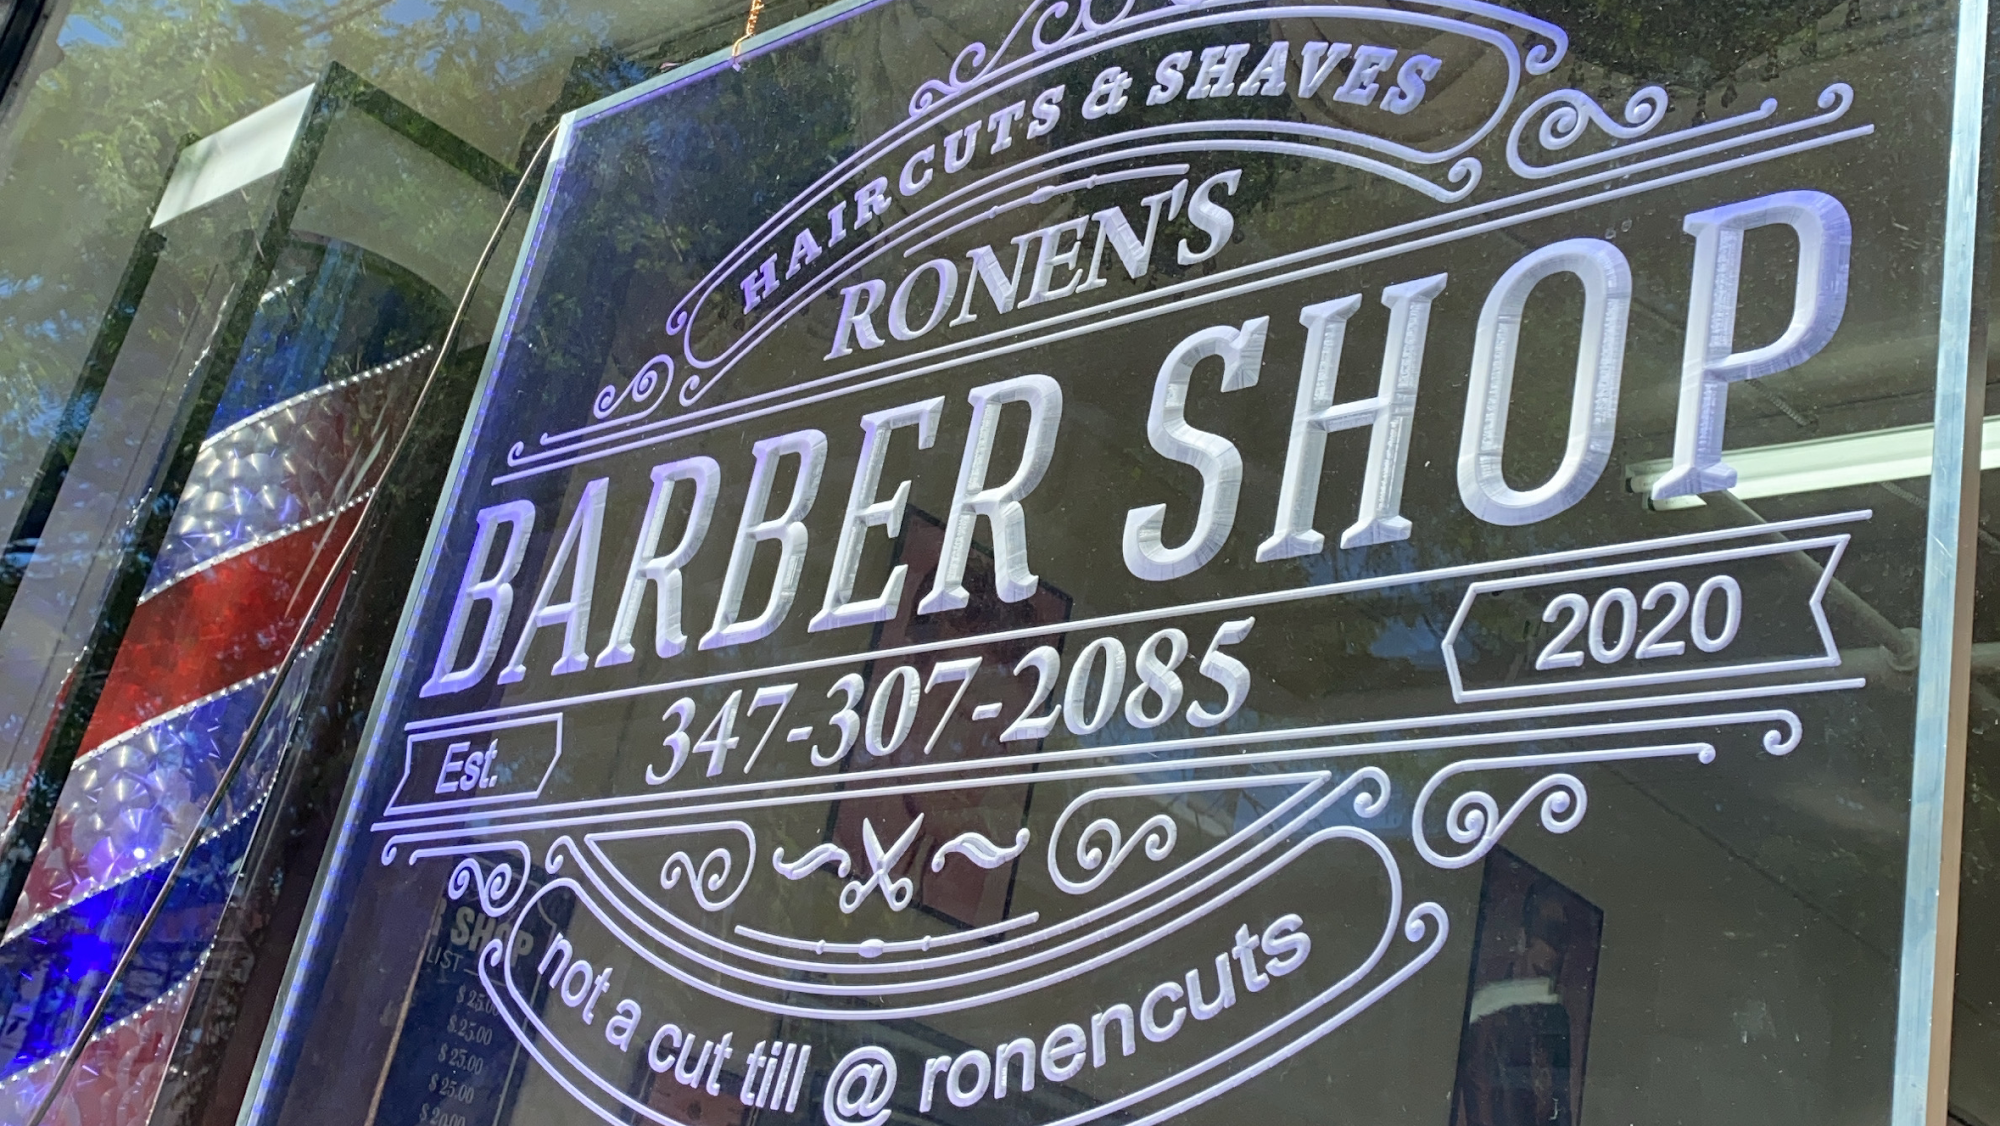 Ronen’s Barbershop 91 Main St, Dobbs Ferry New York 10522